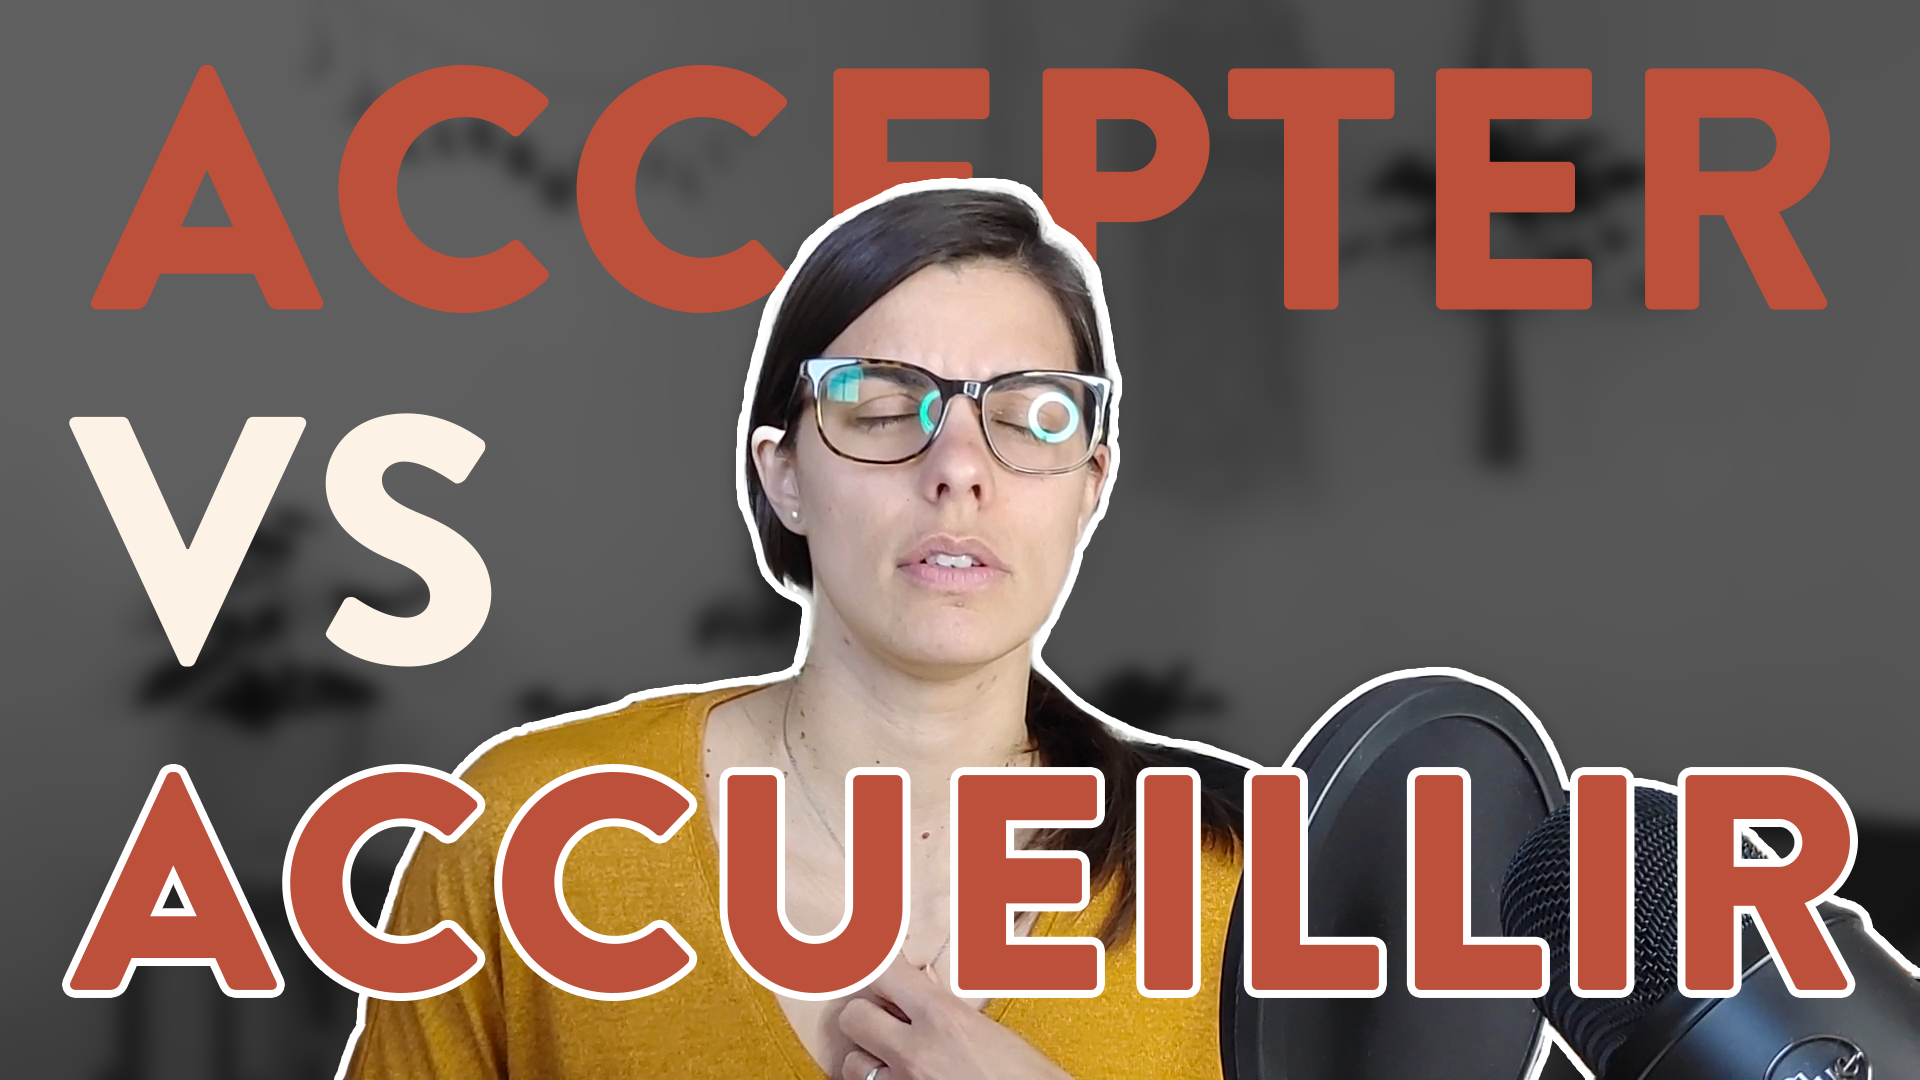 Accepter -vs- Accueillir